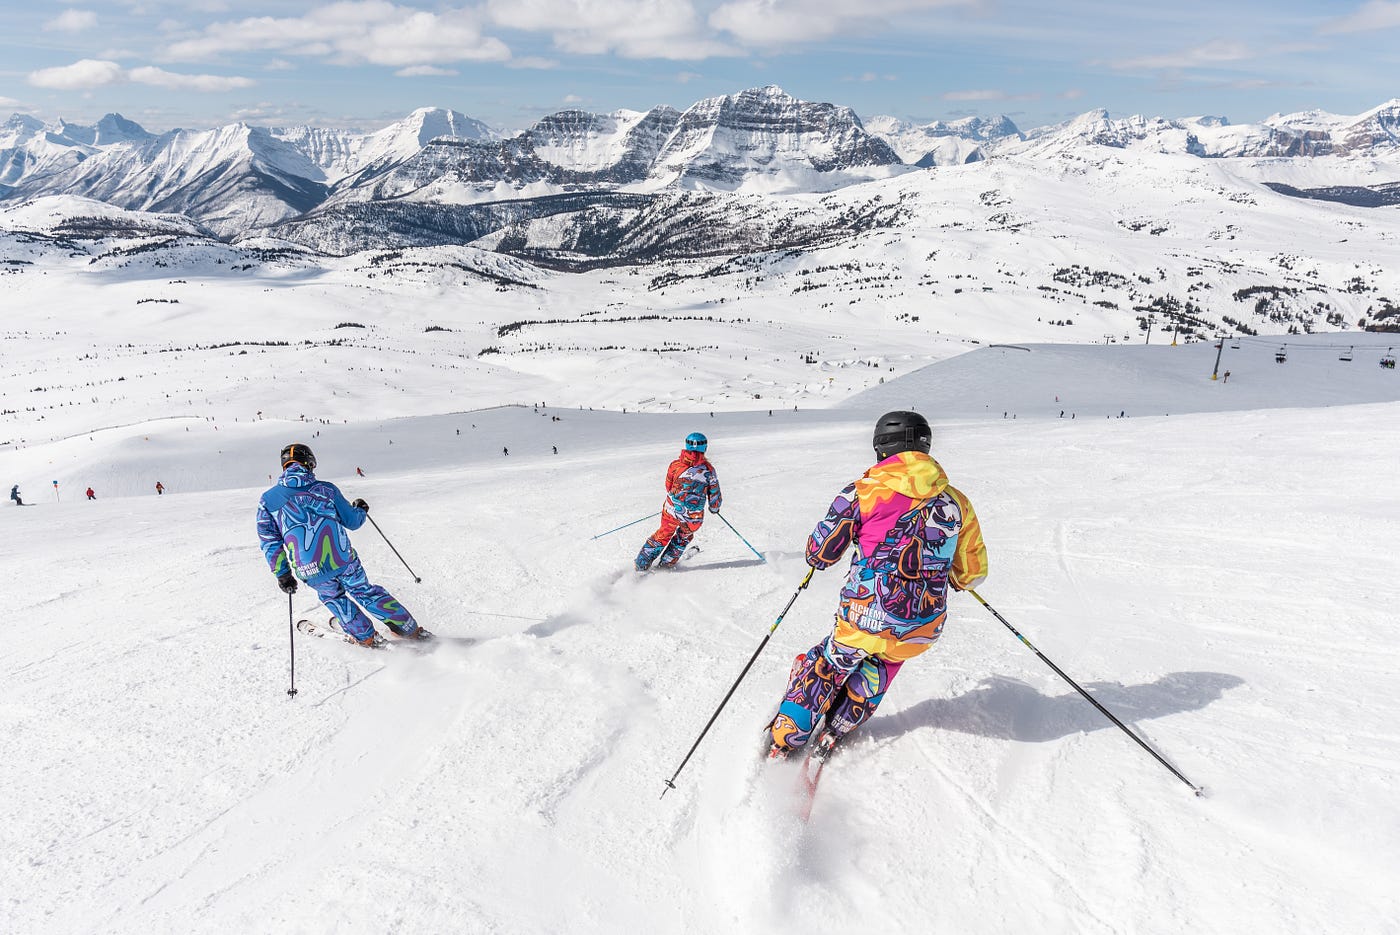 Three skiers riding down the mountain